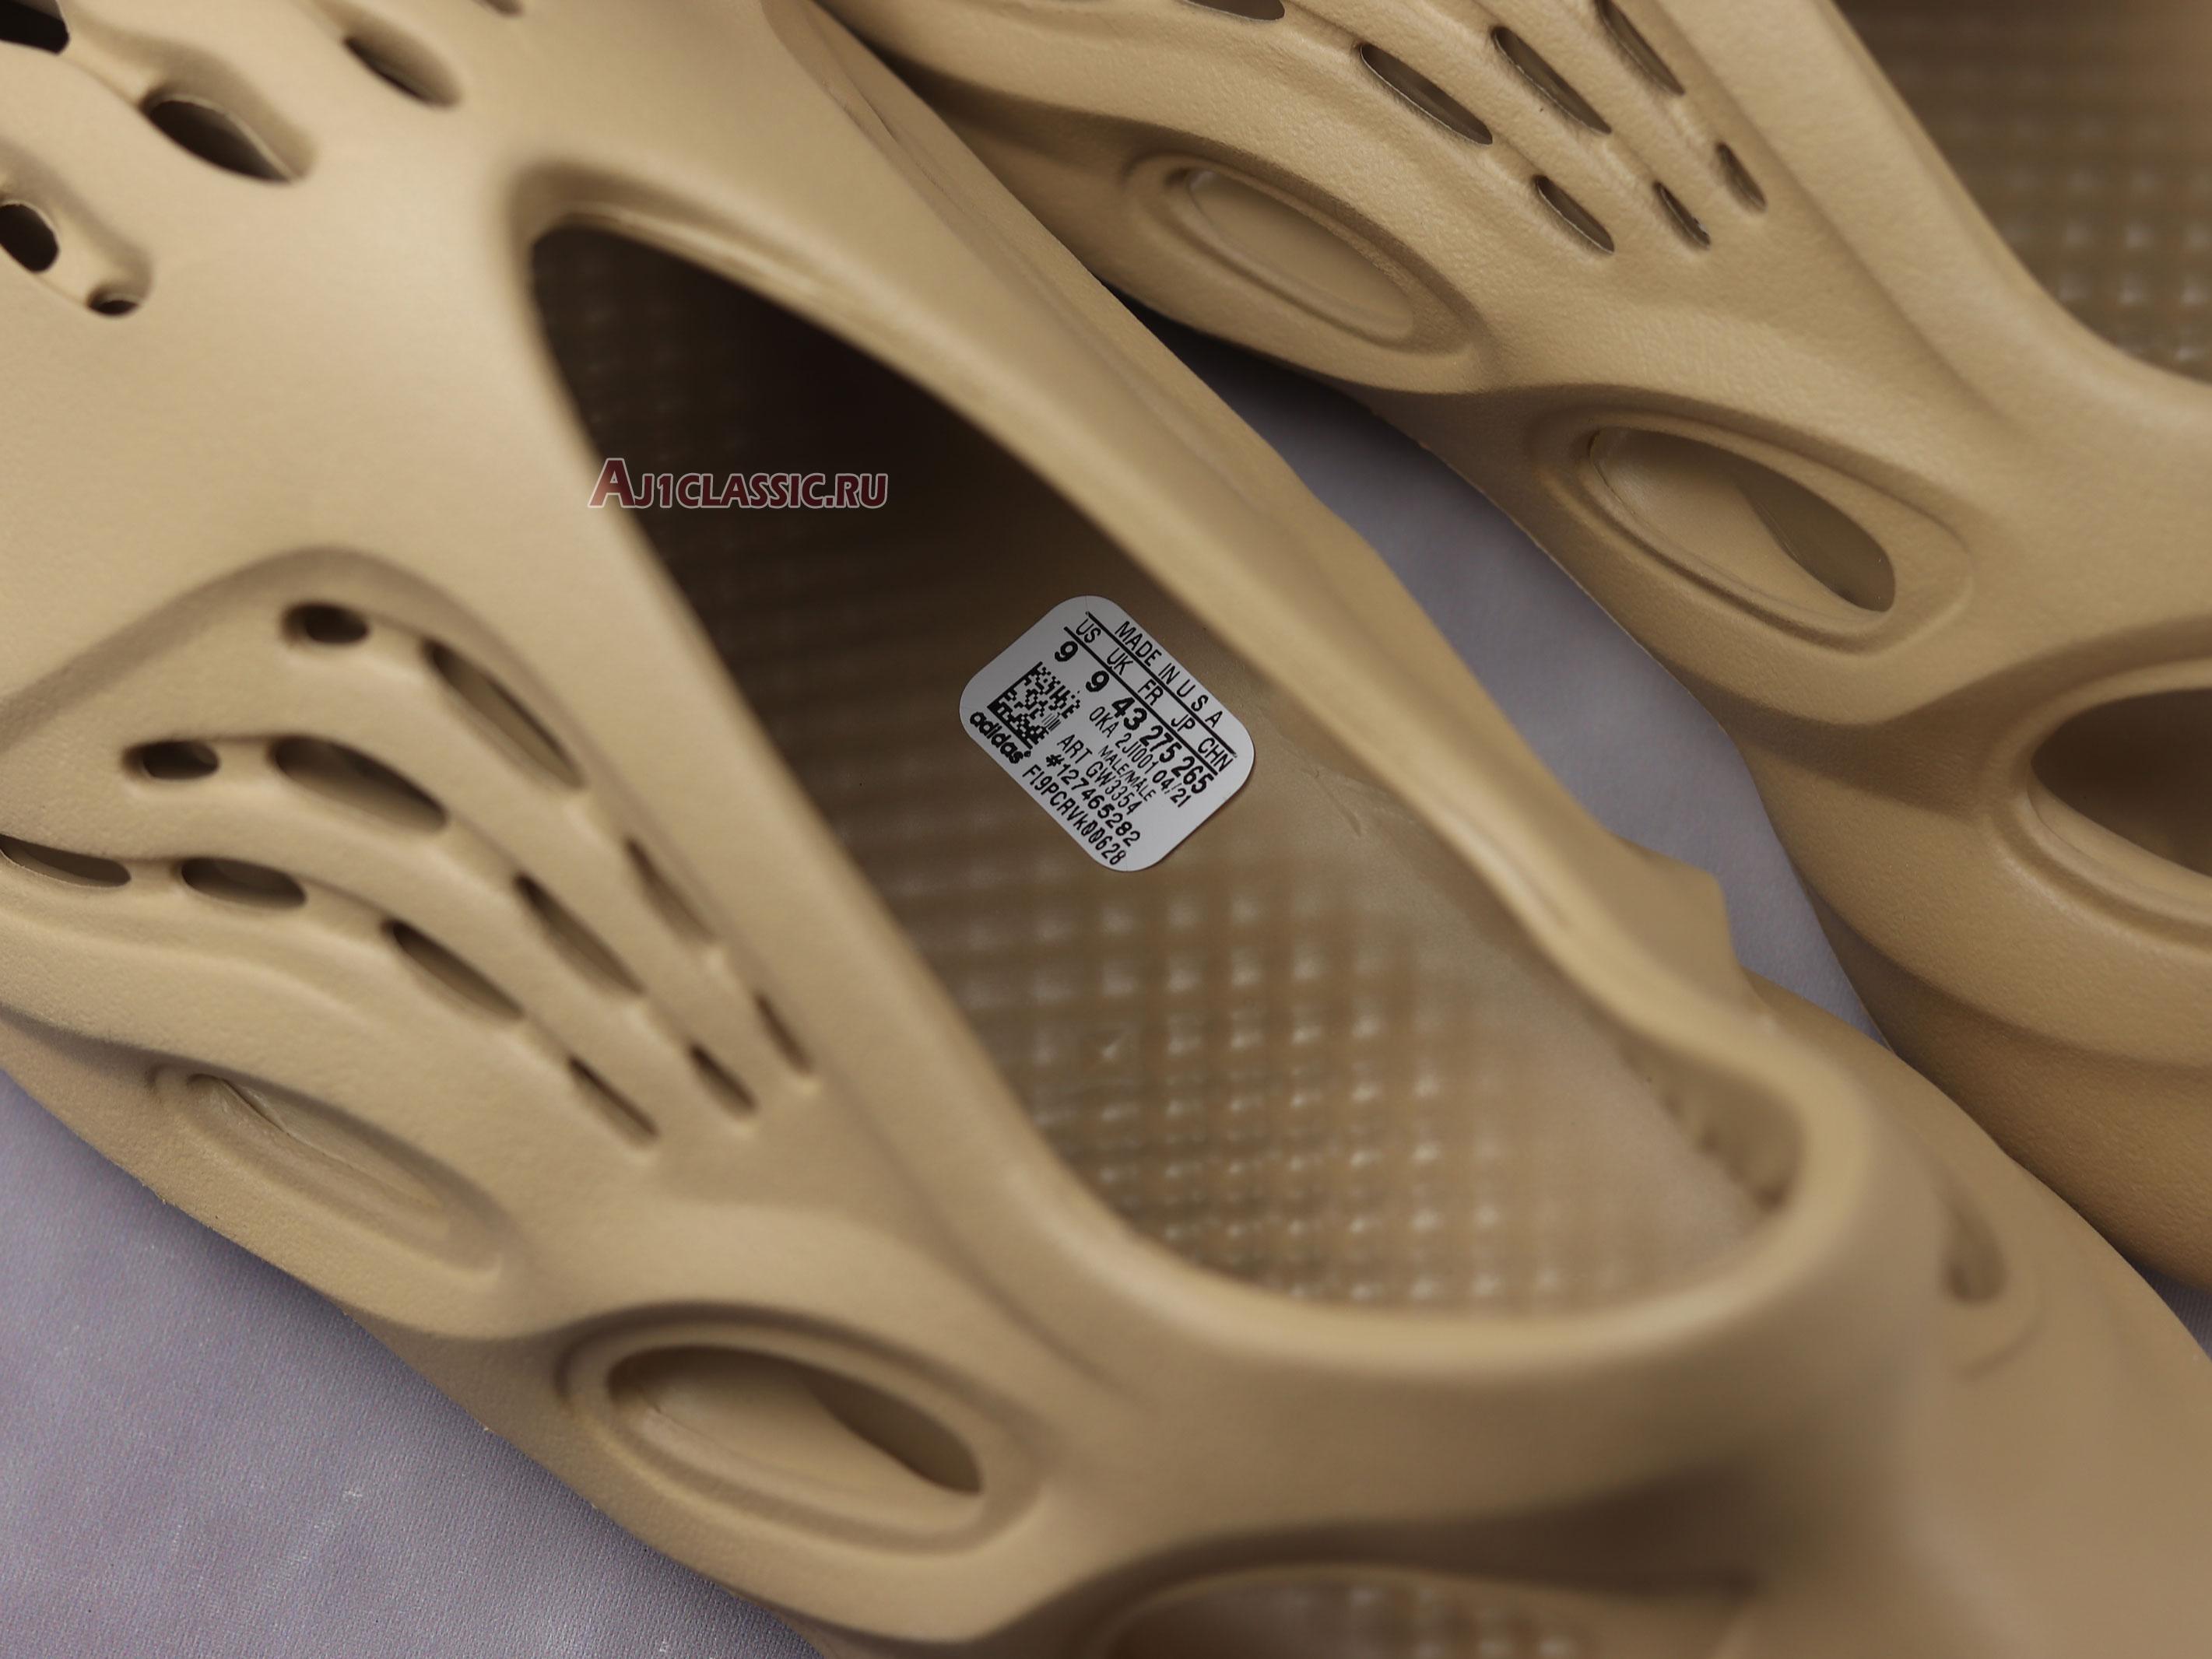 Adidas Yeezy Foam Runner "Ochre" GW3354